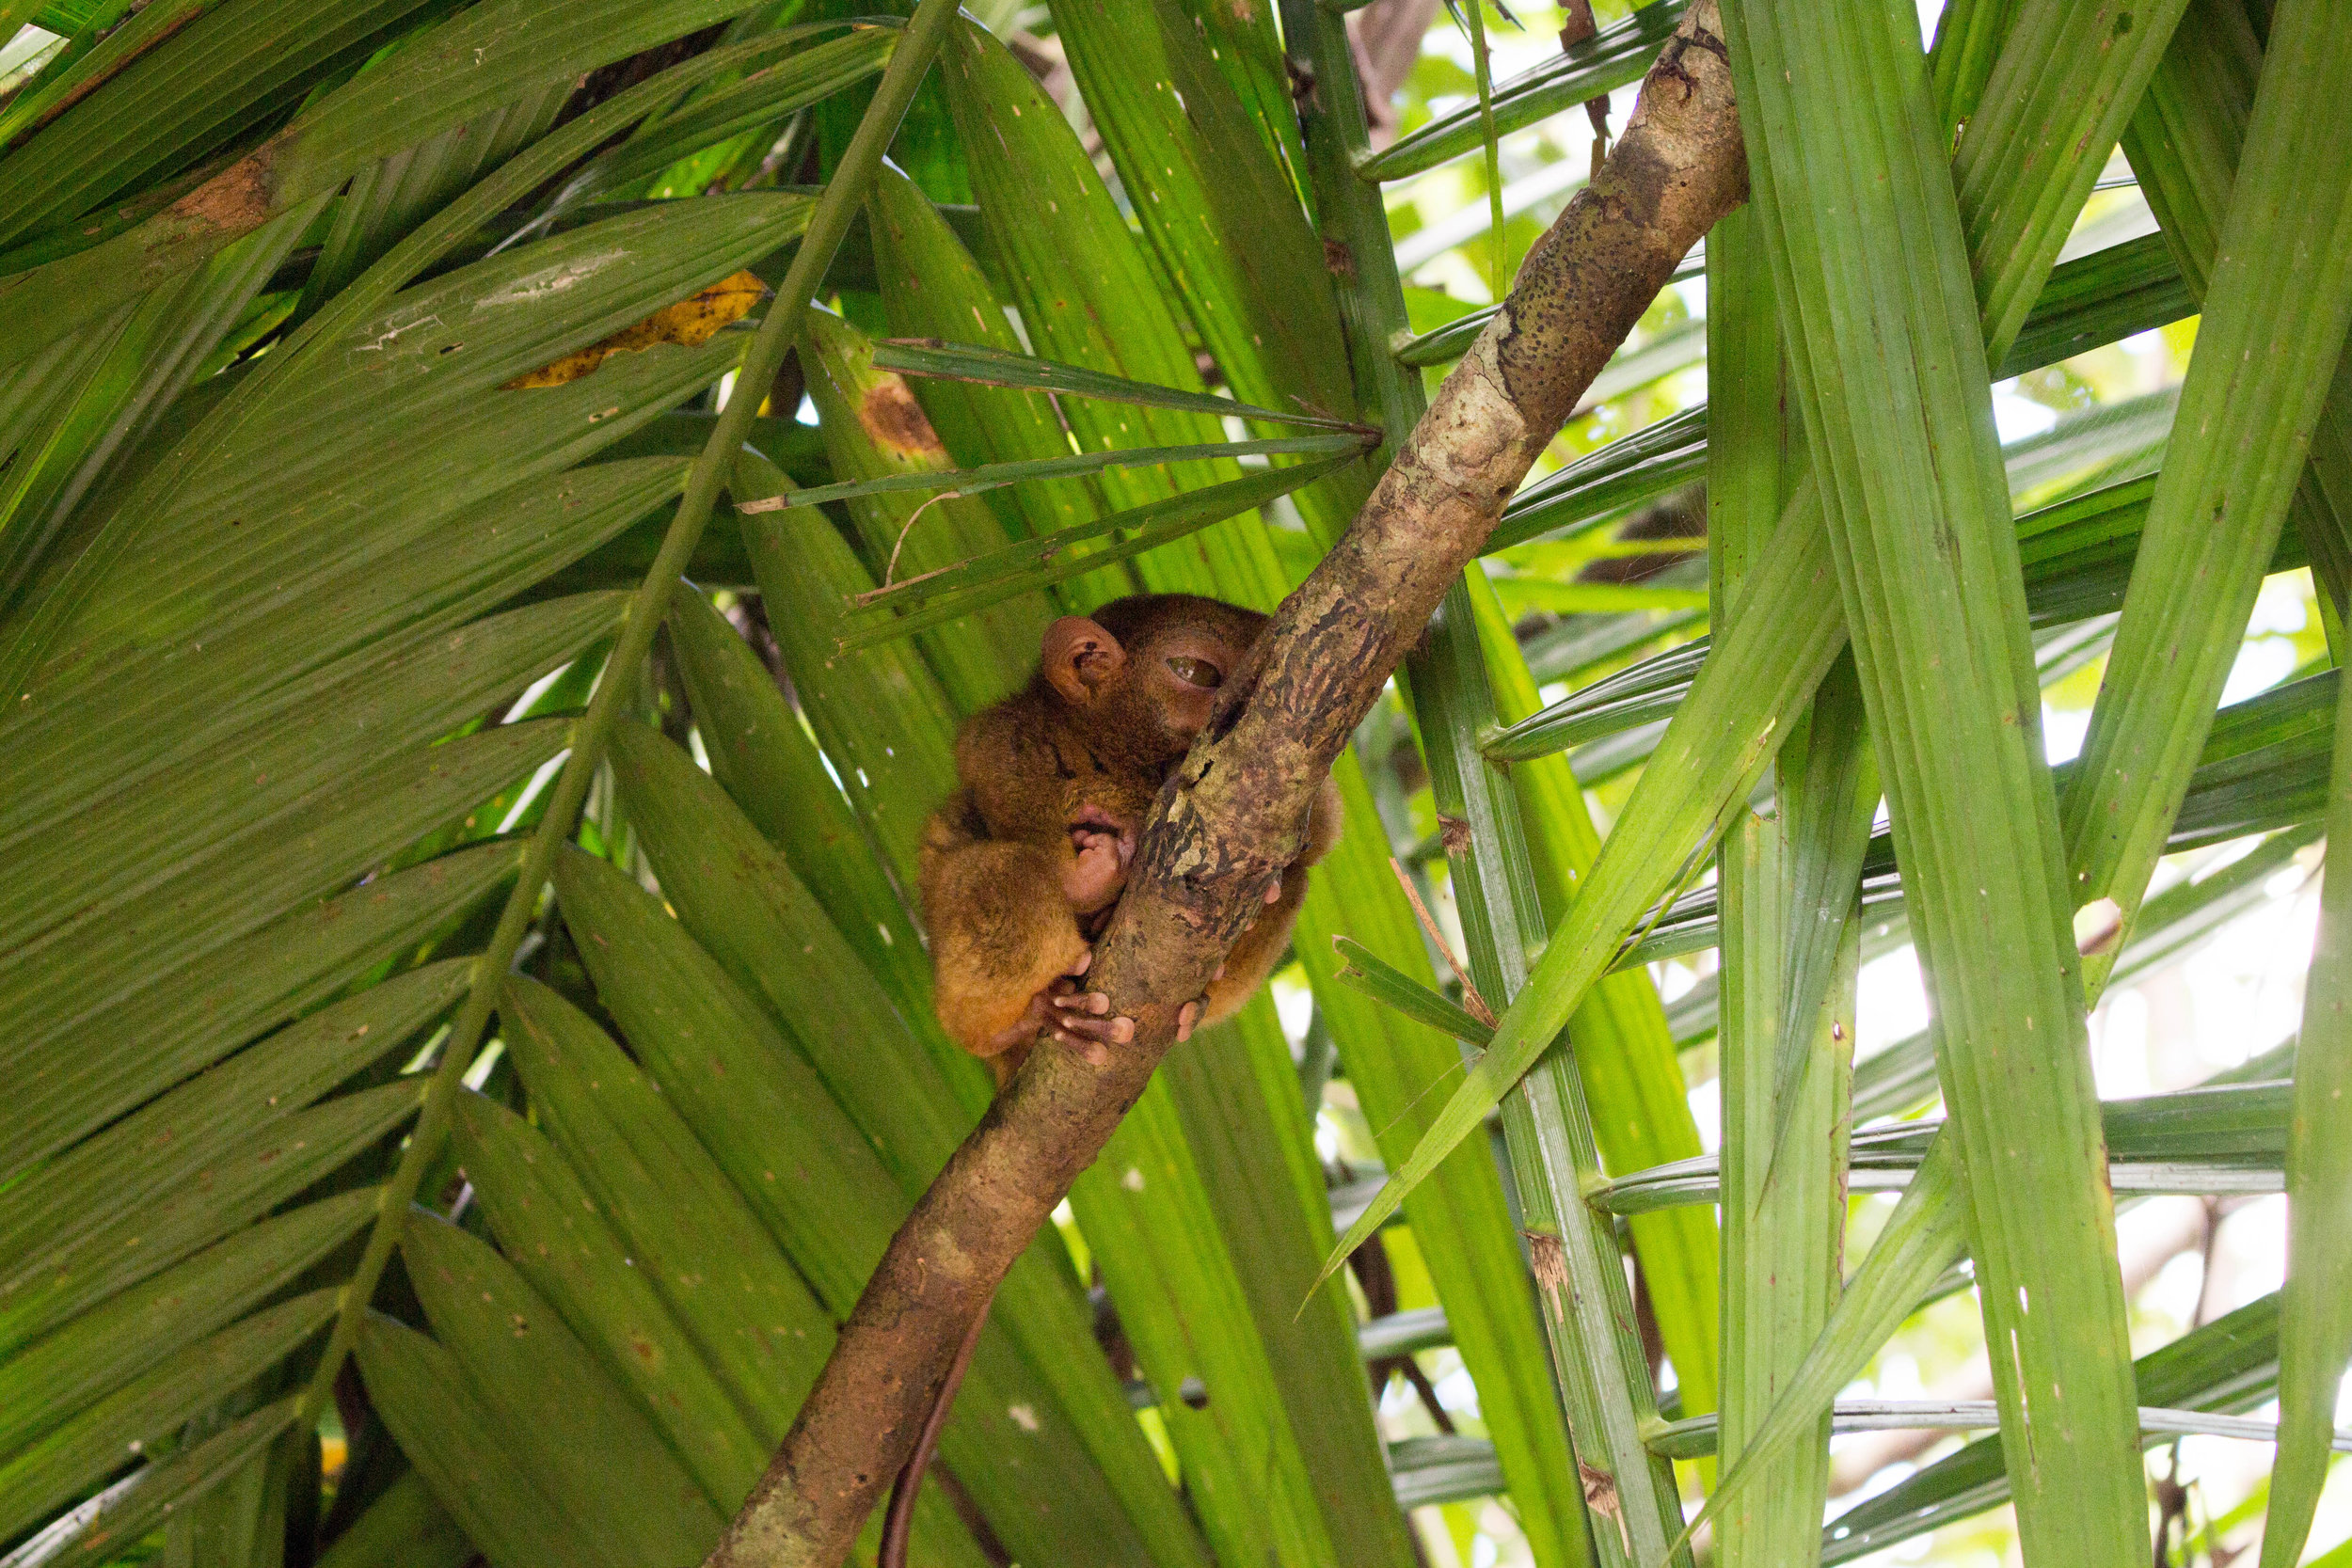 tarsiers look a bit like if a really tiny koala was crossed with a tree frog